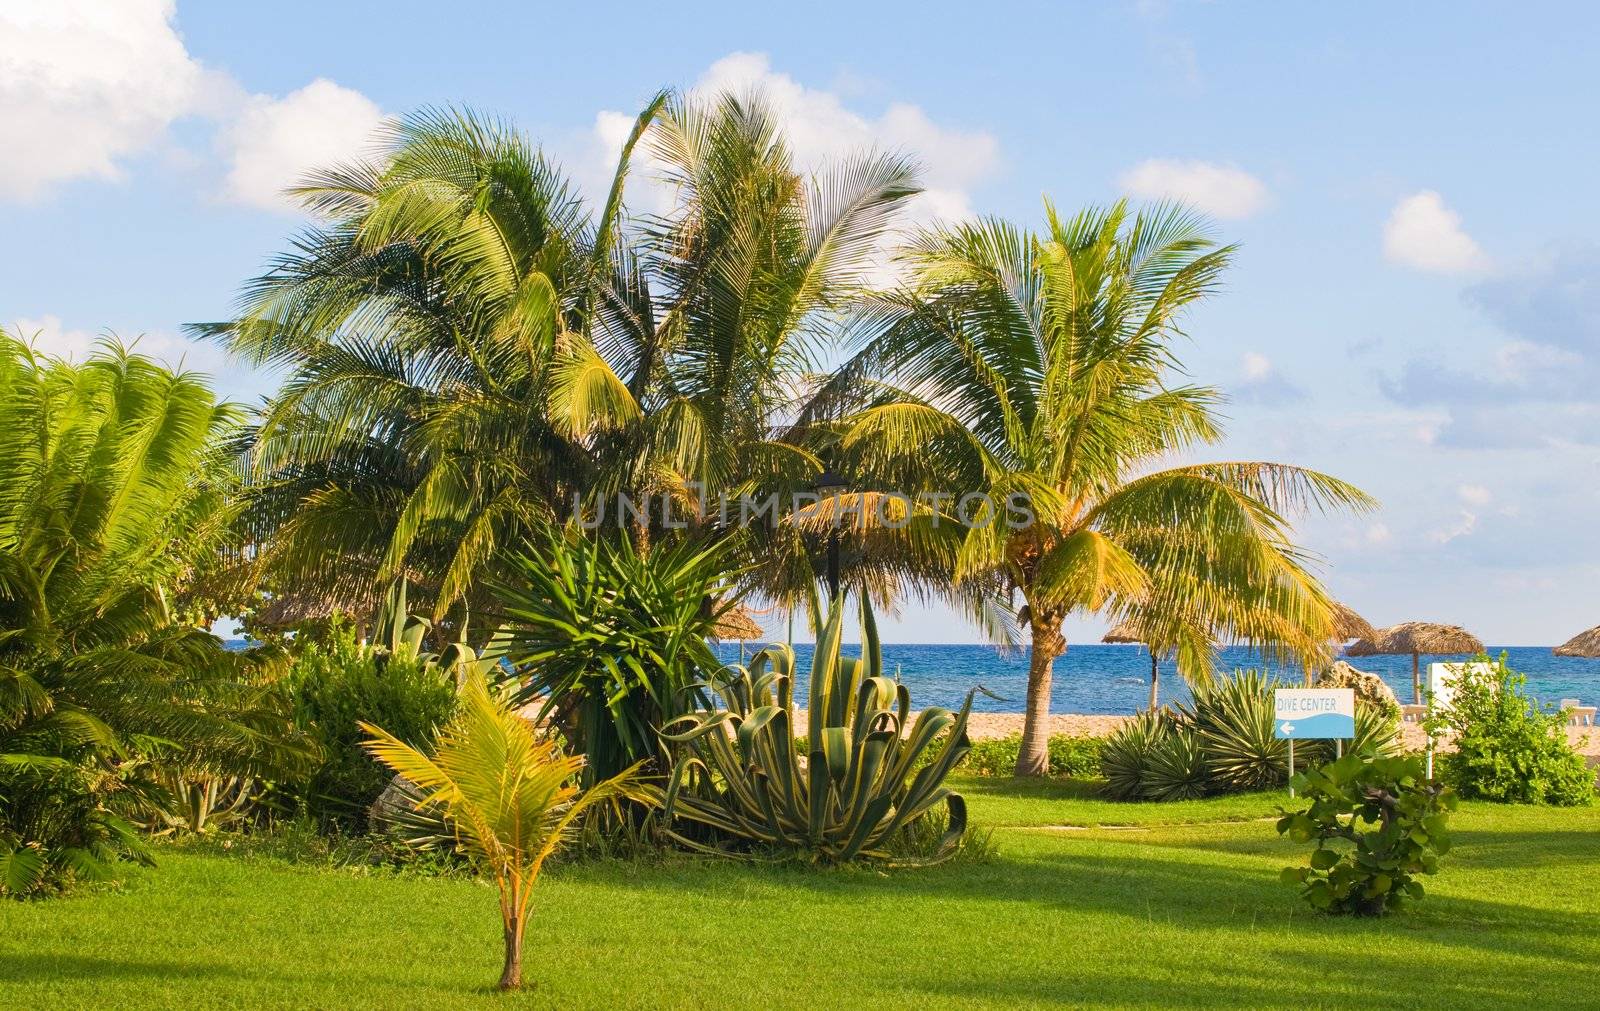 Lush vegetation along the blue caribbean sea.